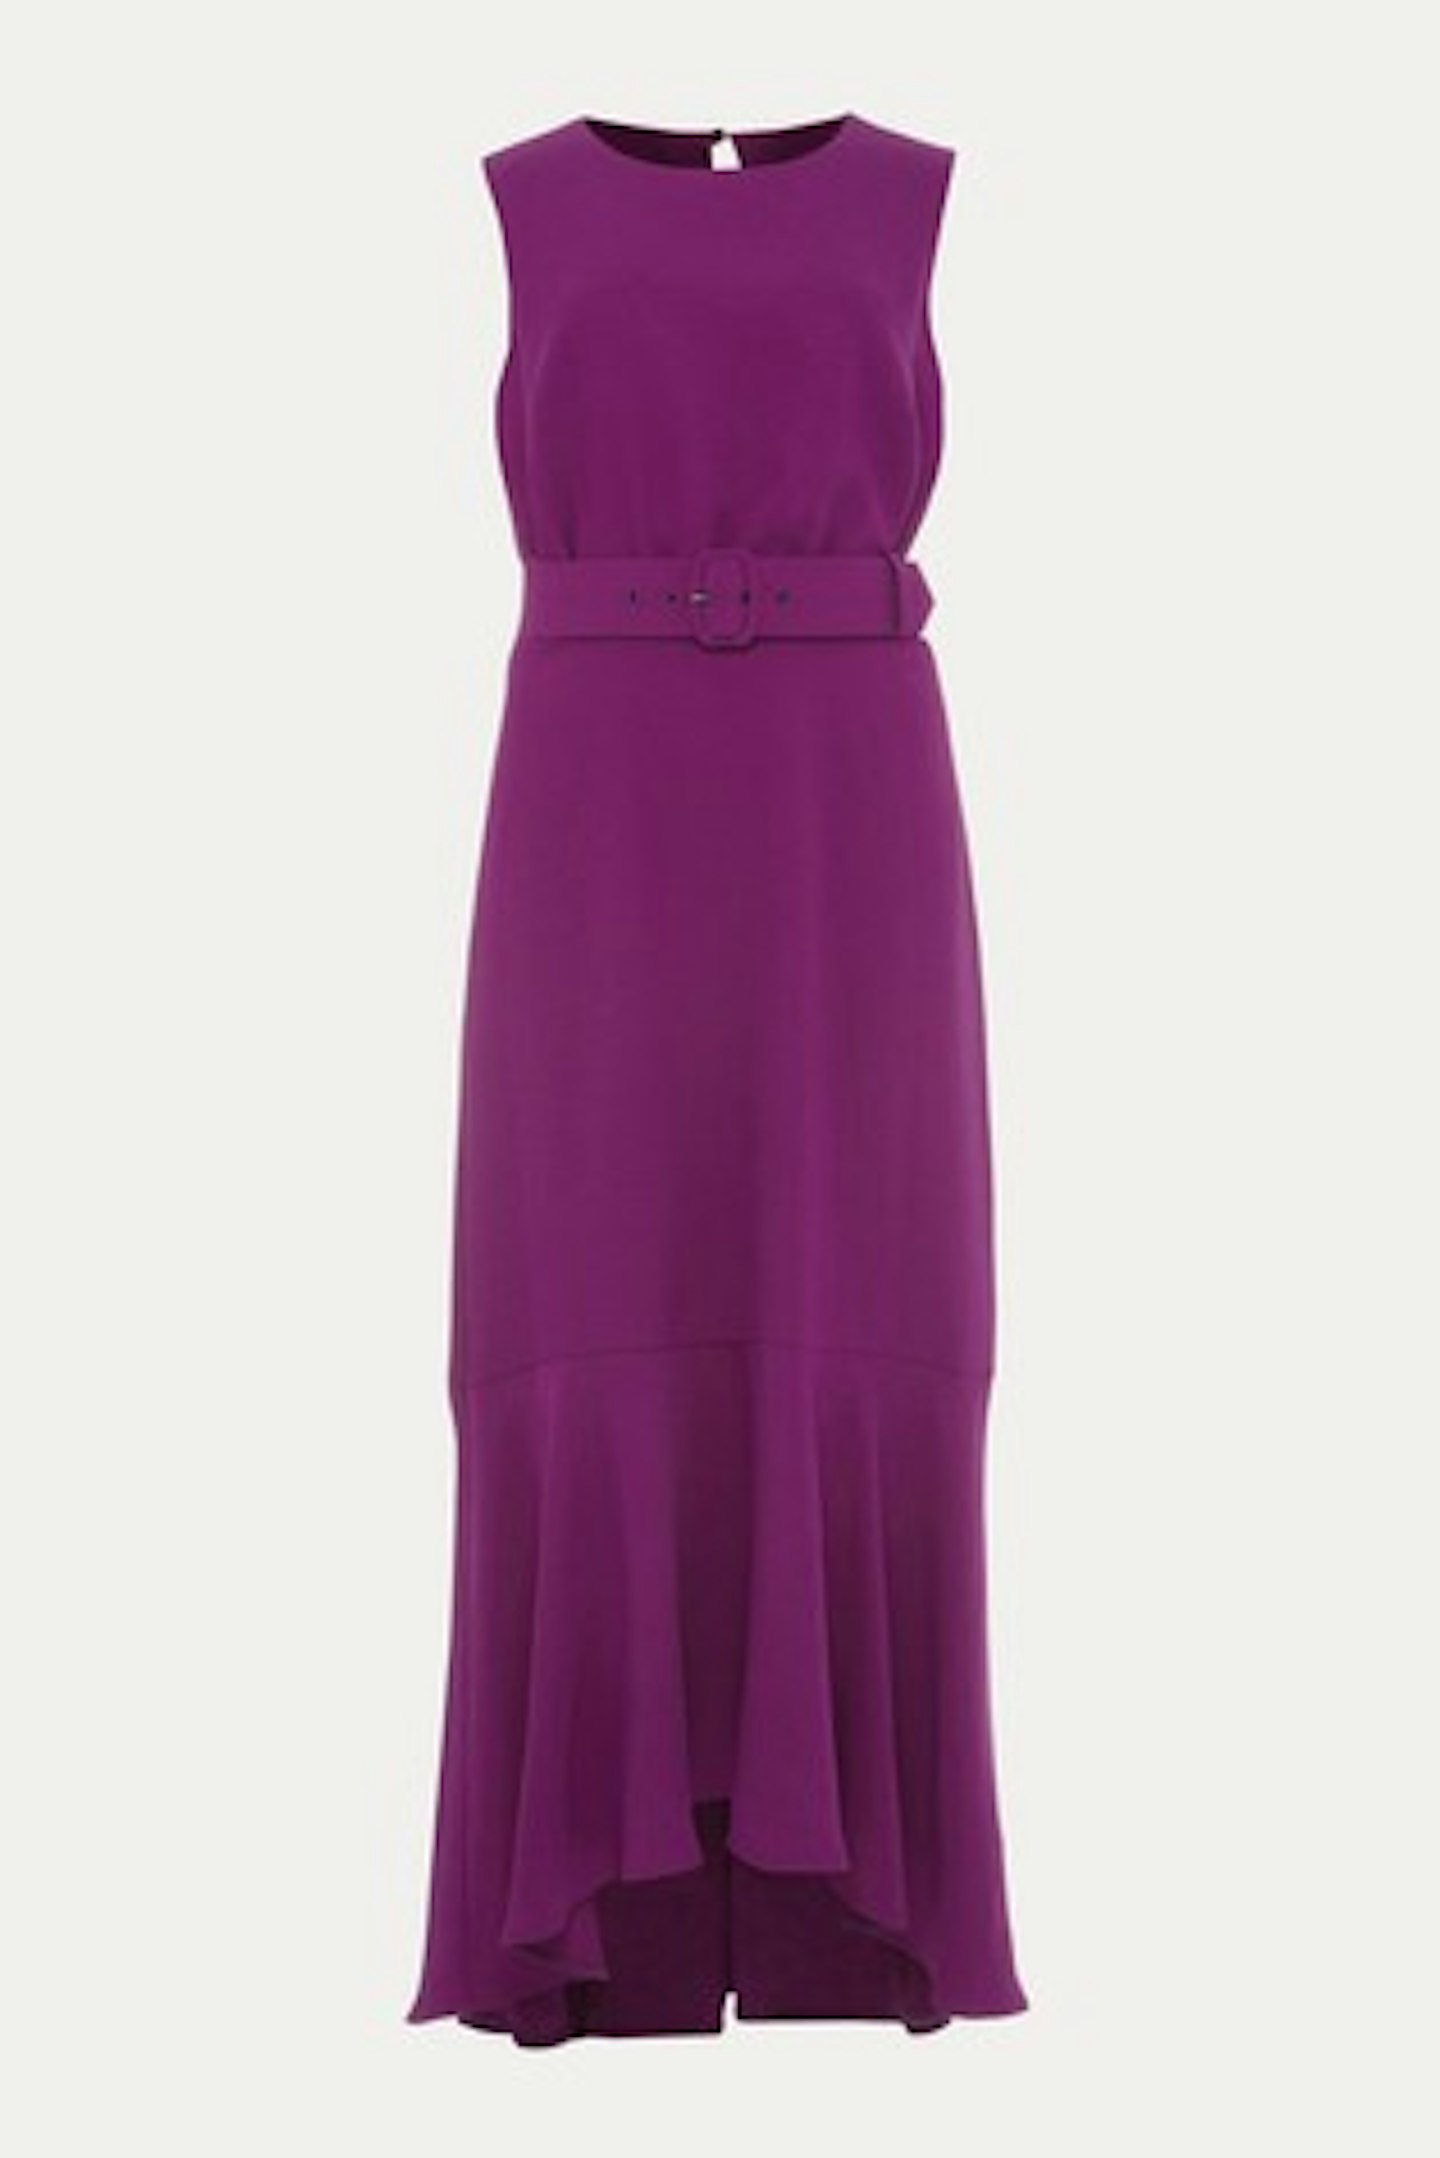 Phase Eight, Purple Karli Belted Dress, £120